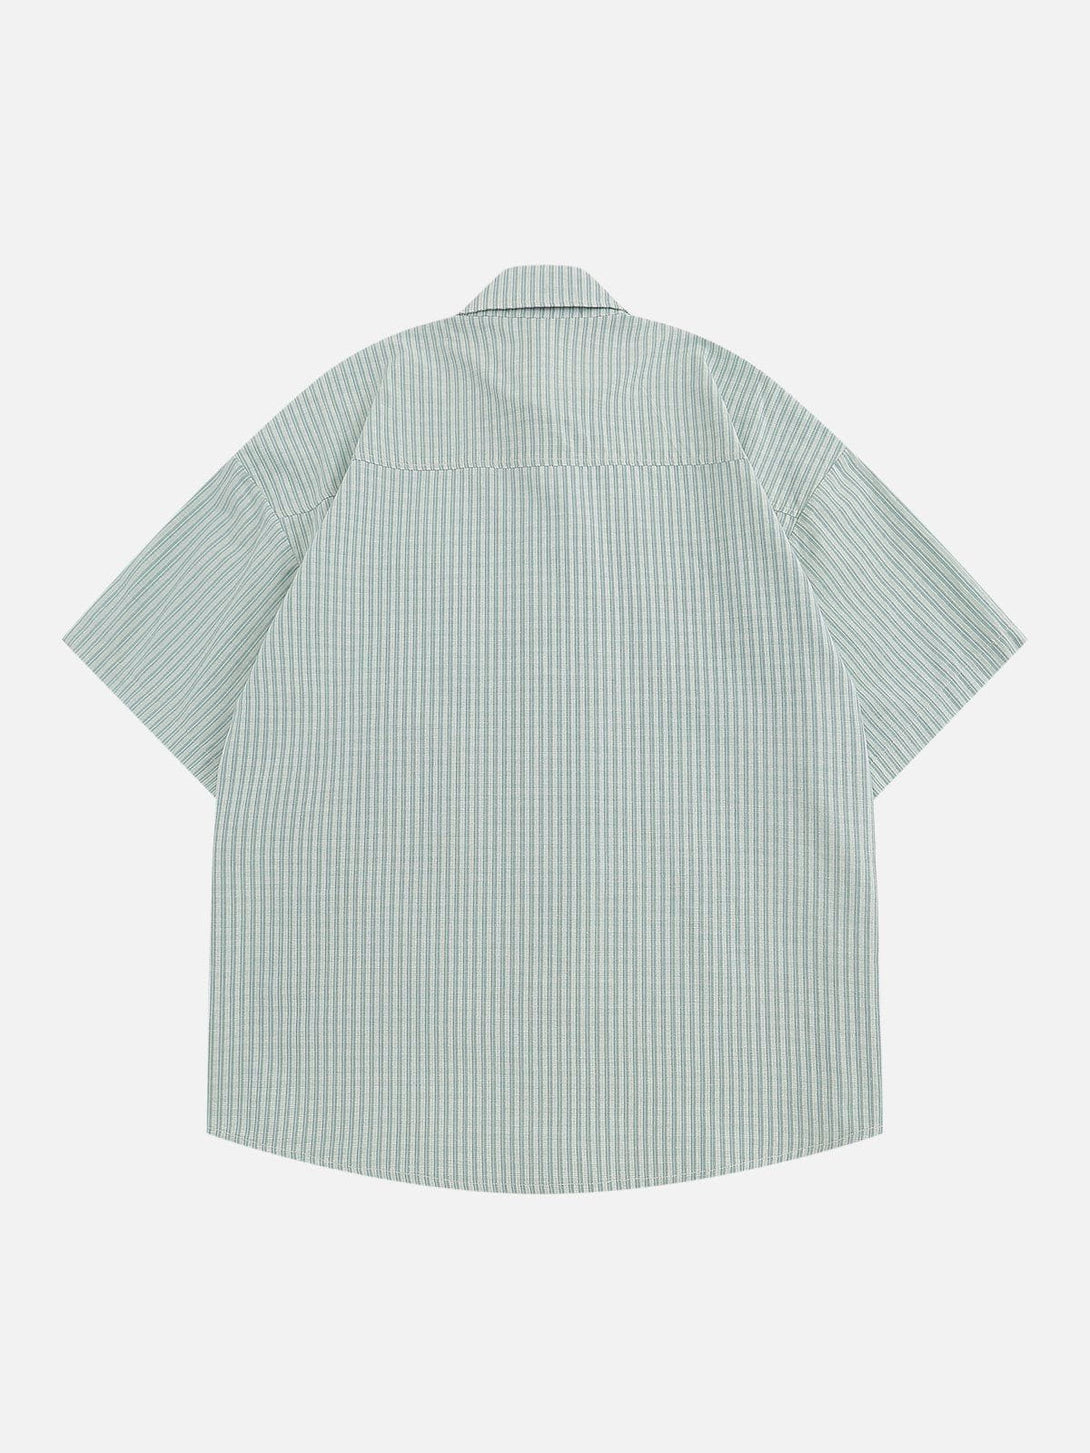 Majesda® - Flower Applique Short Sleeve Shirts outfit ideas streetwear fashion